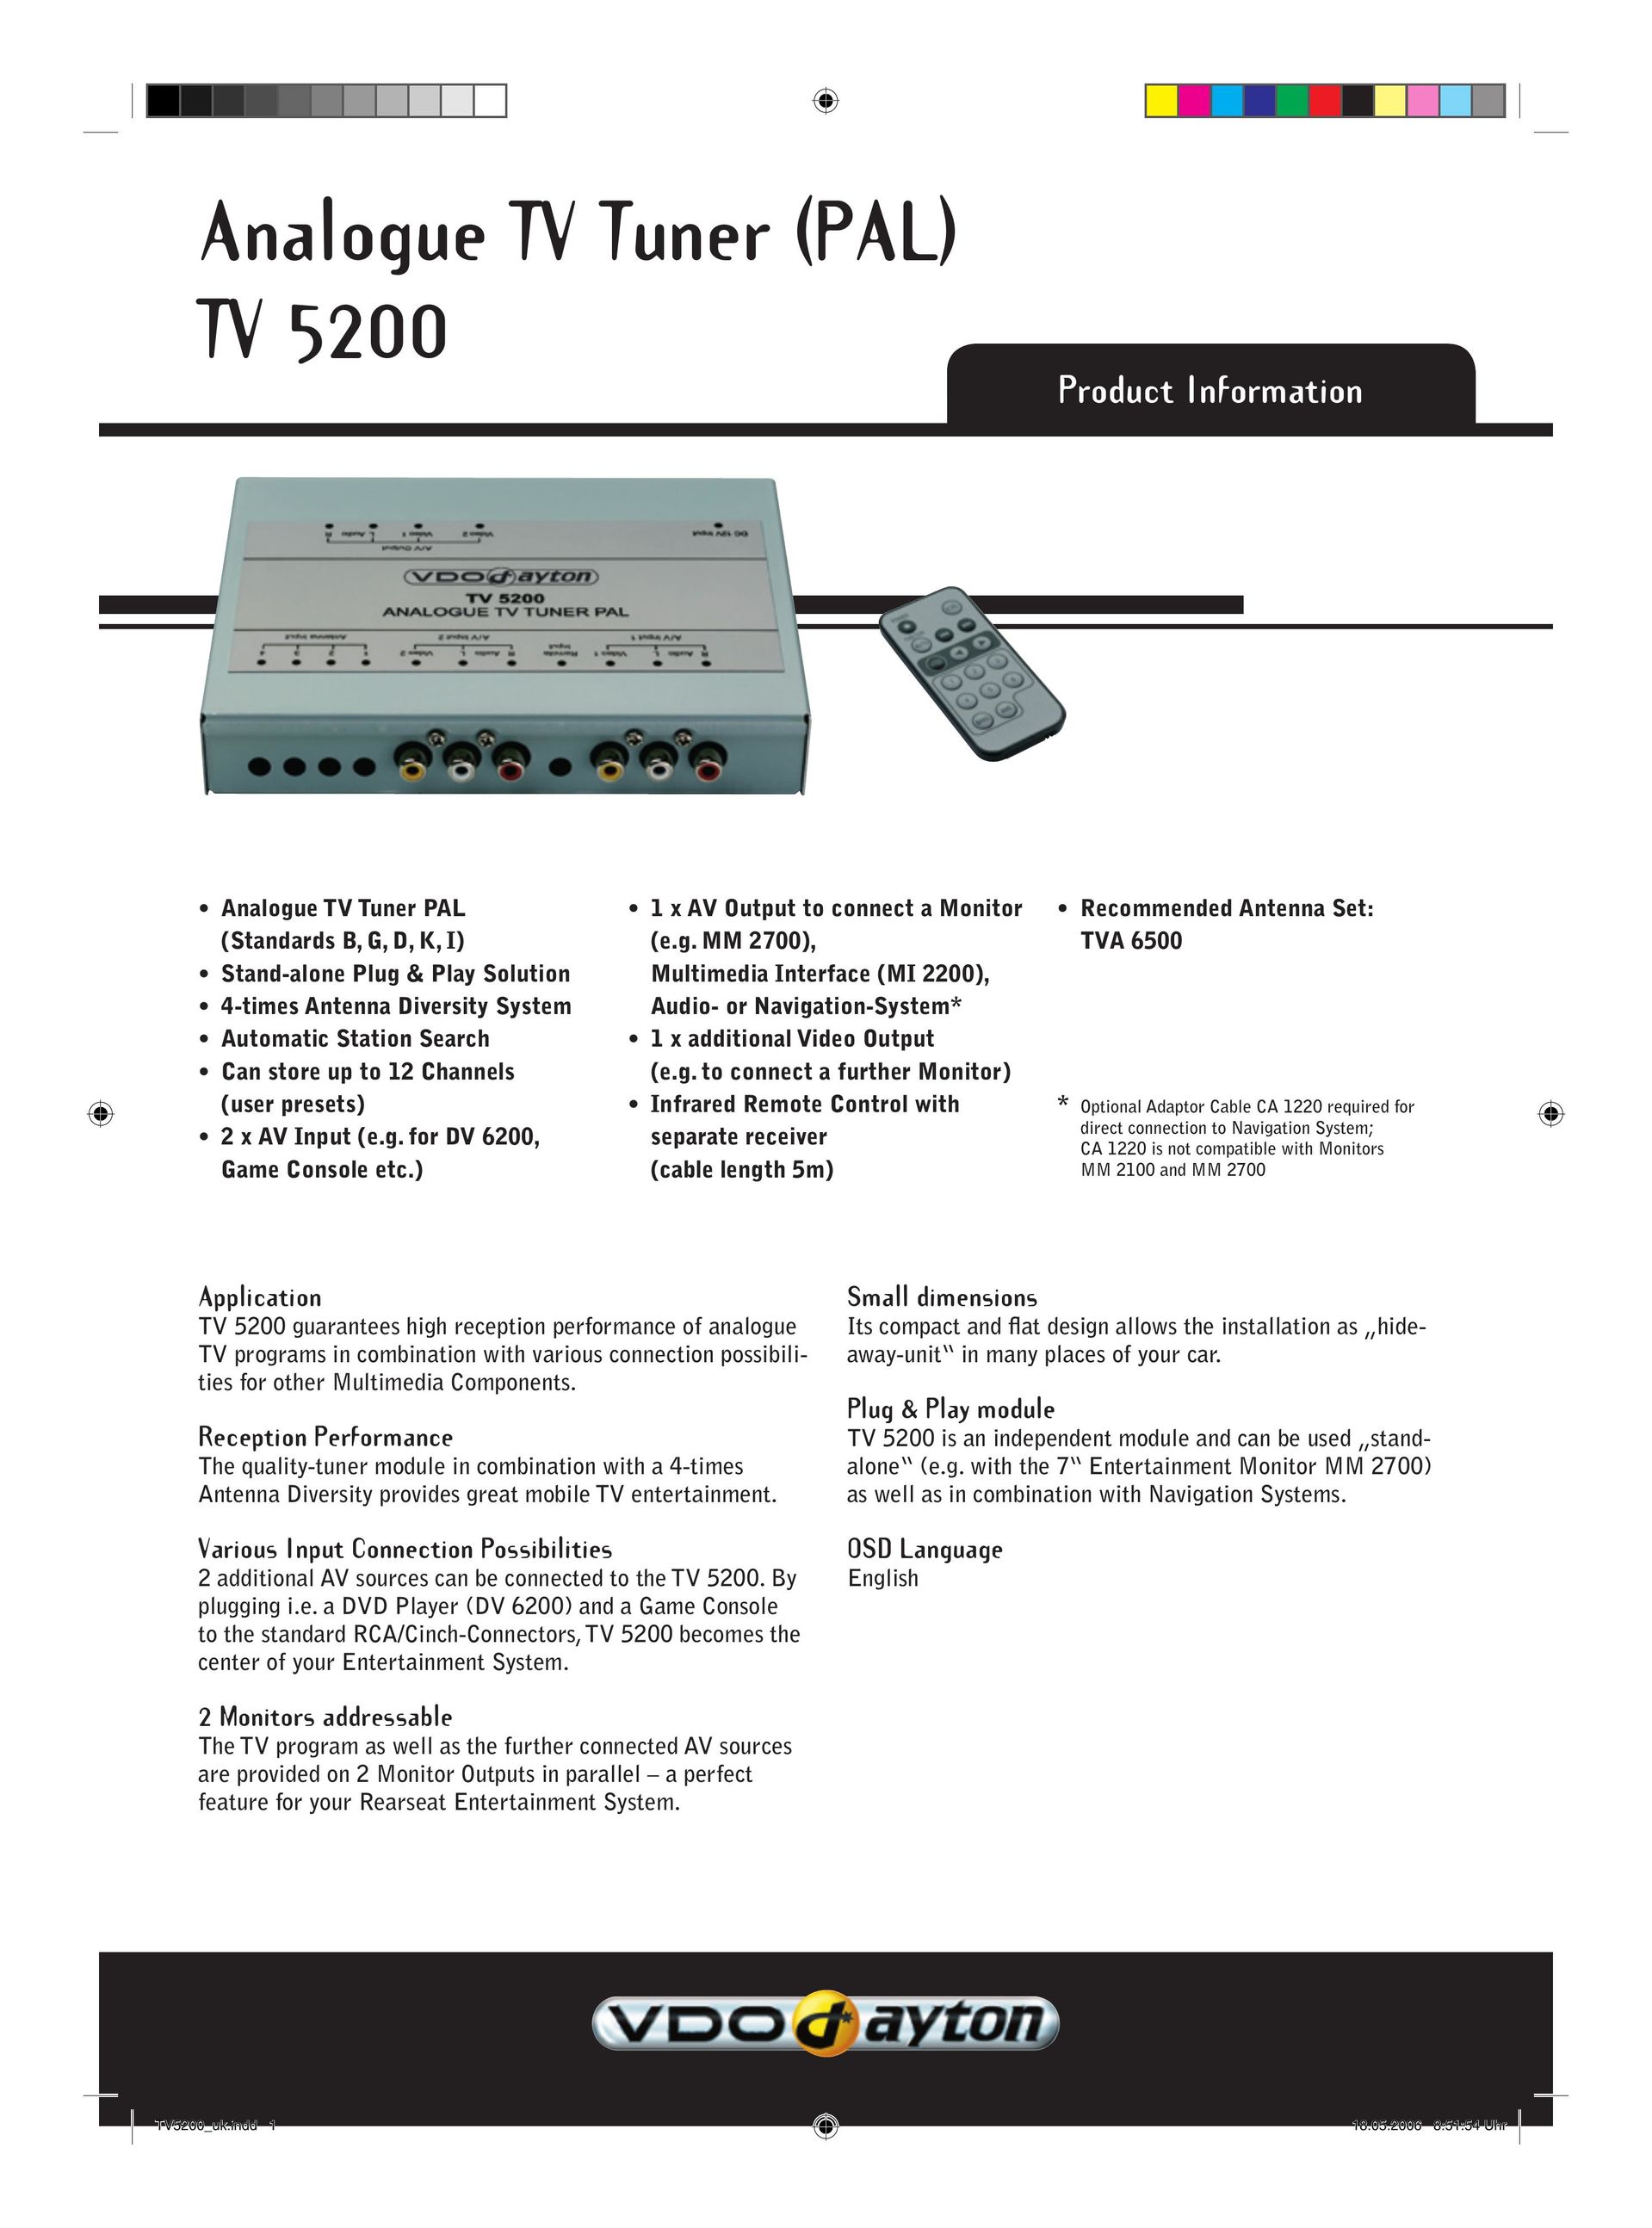 VDO Dayton TV 5200 TV Receiver User Manual